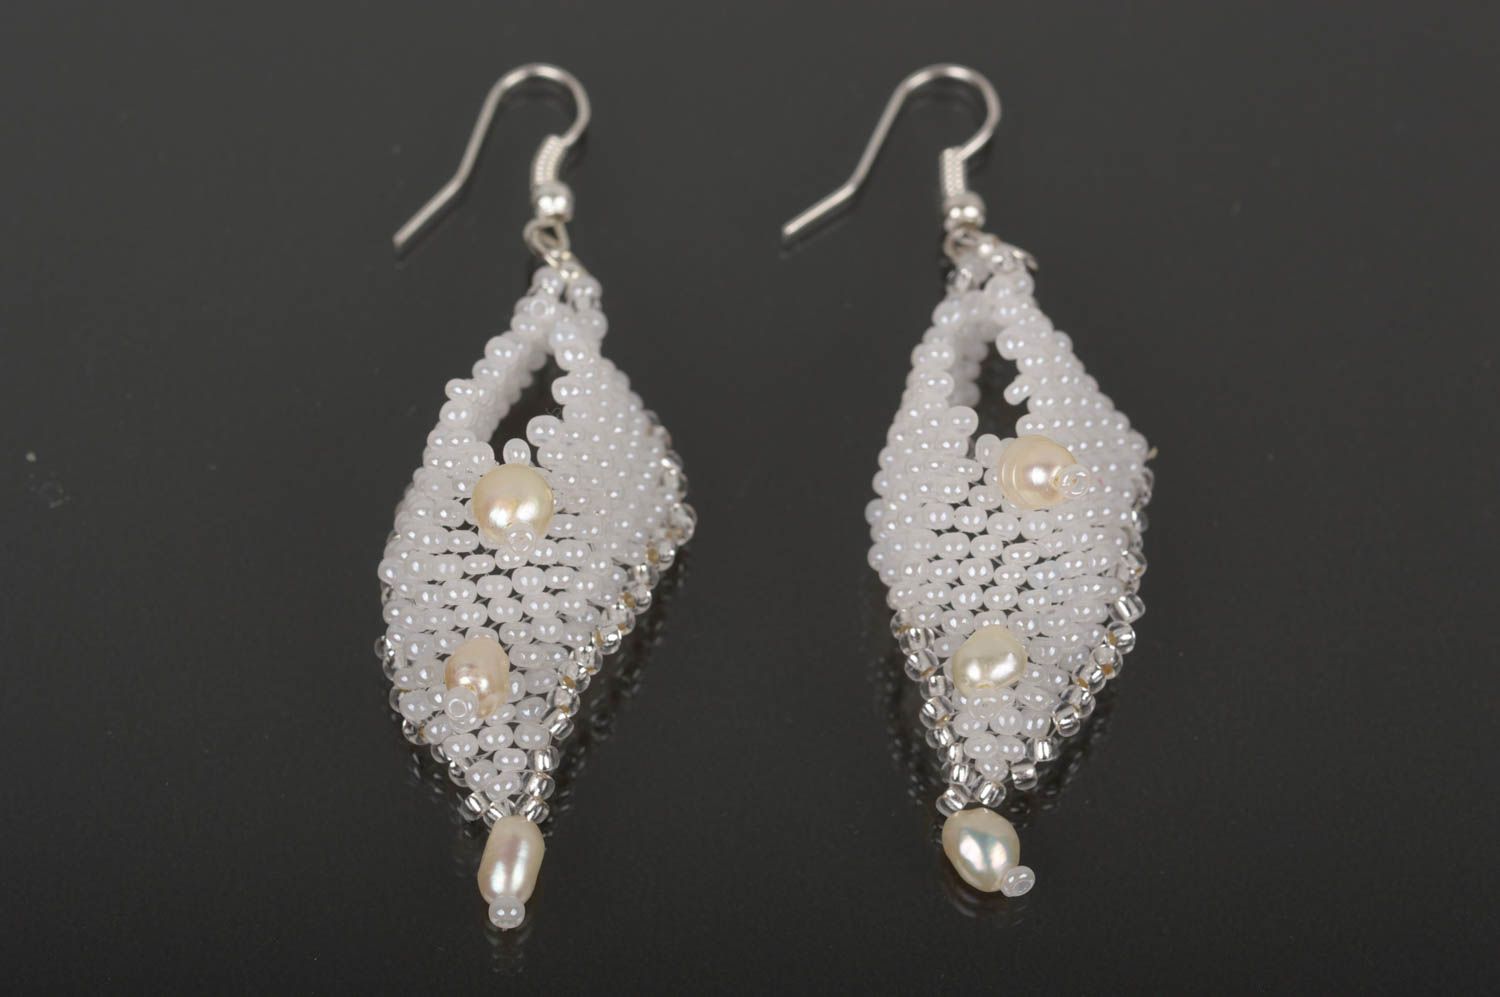 Beautiful handmade beaded earrings pearl earrings wedding jewelry gifts for her photo 1